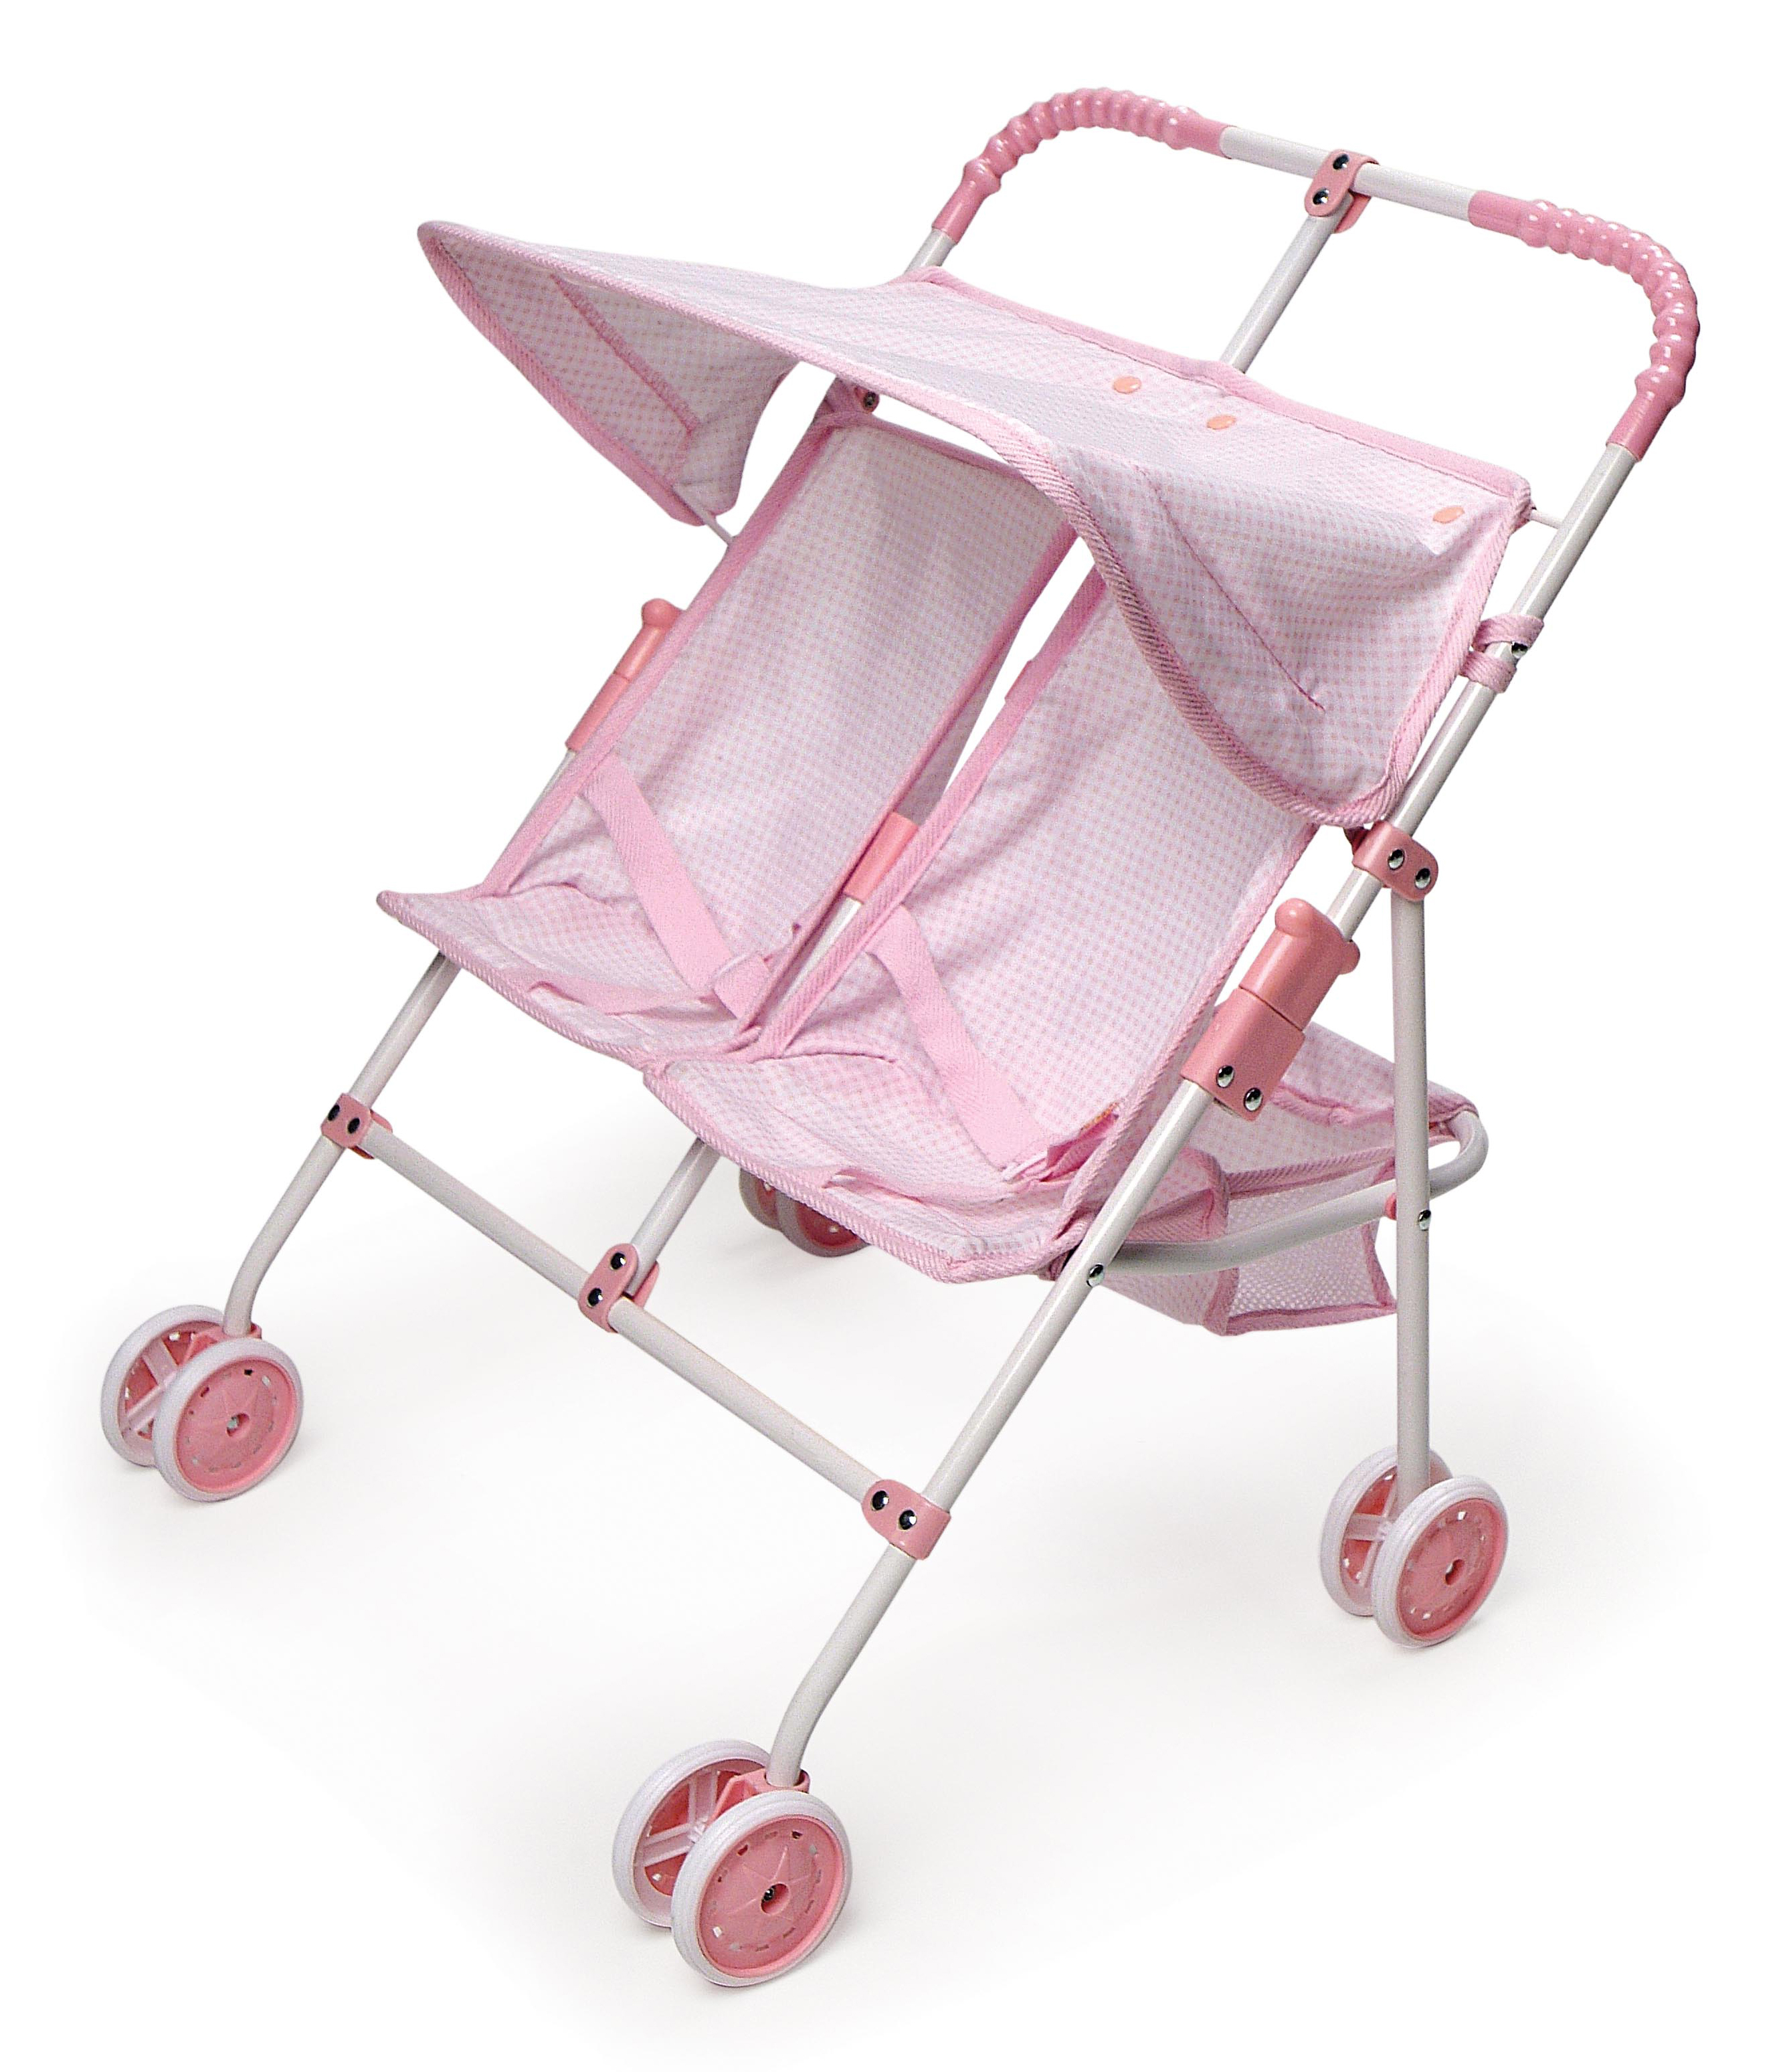 Folding Double Doll Umbrella Stroller - Pink/Gingham